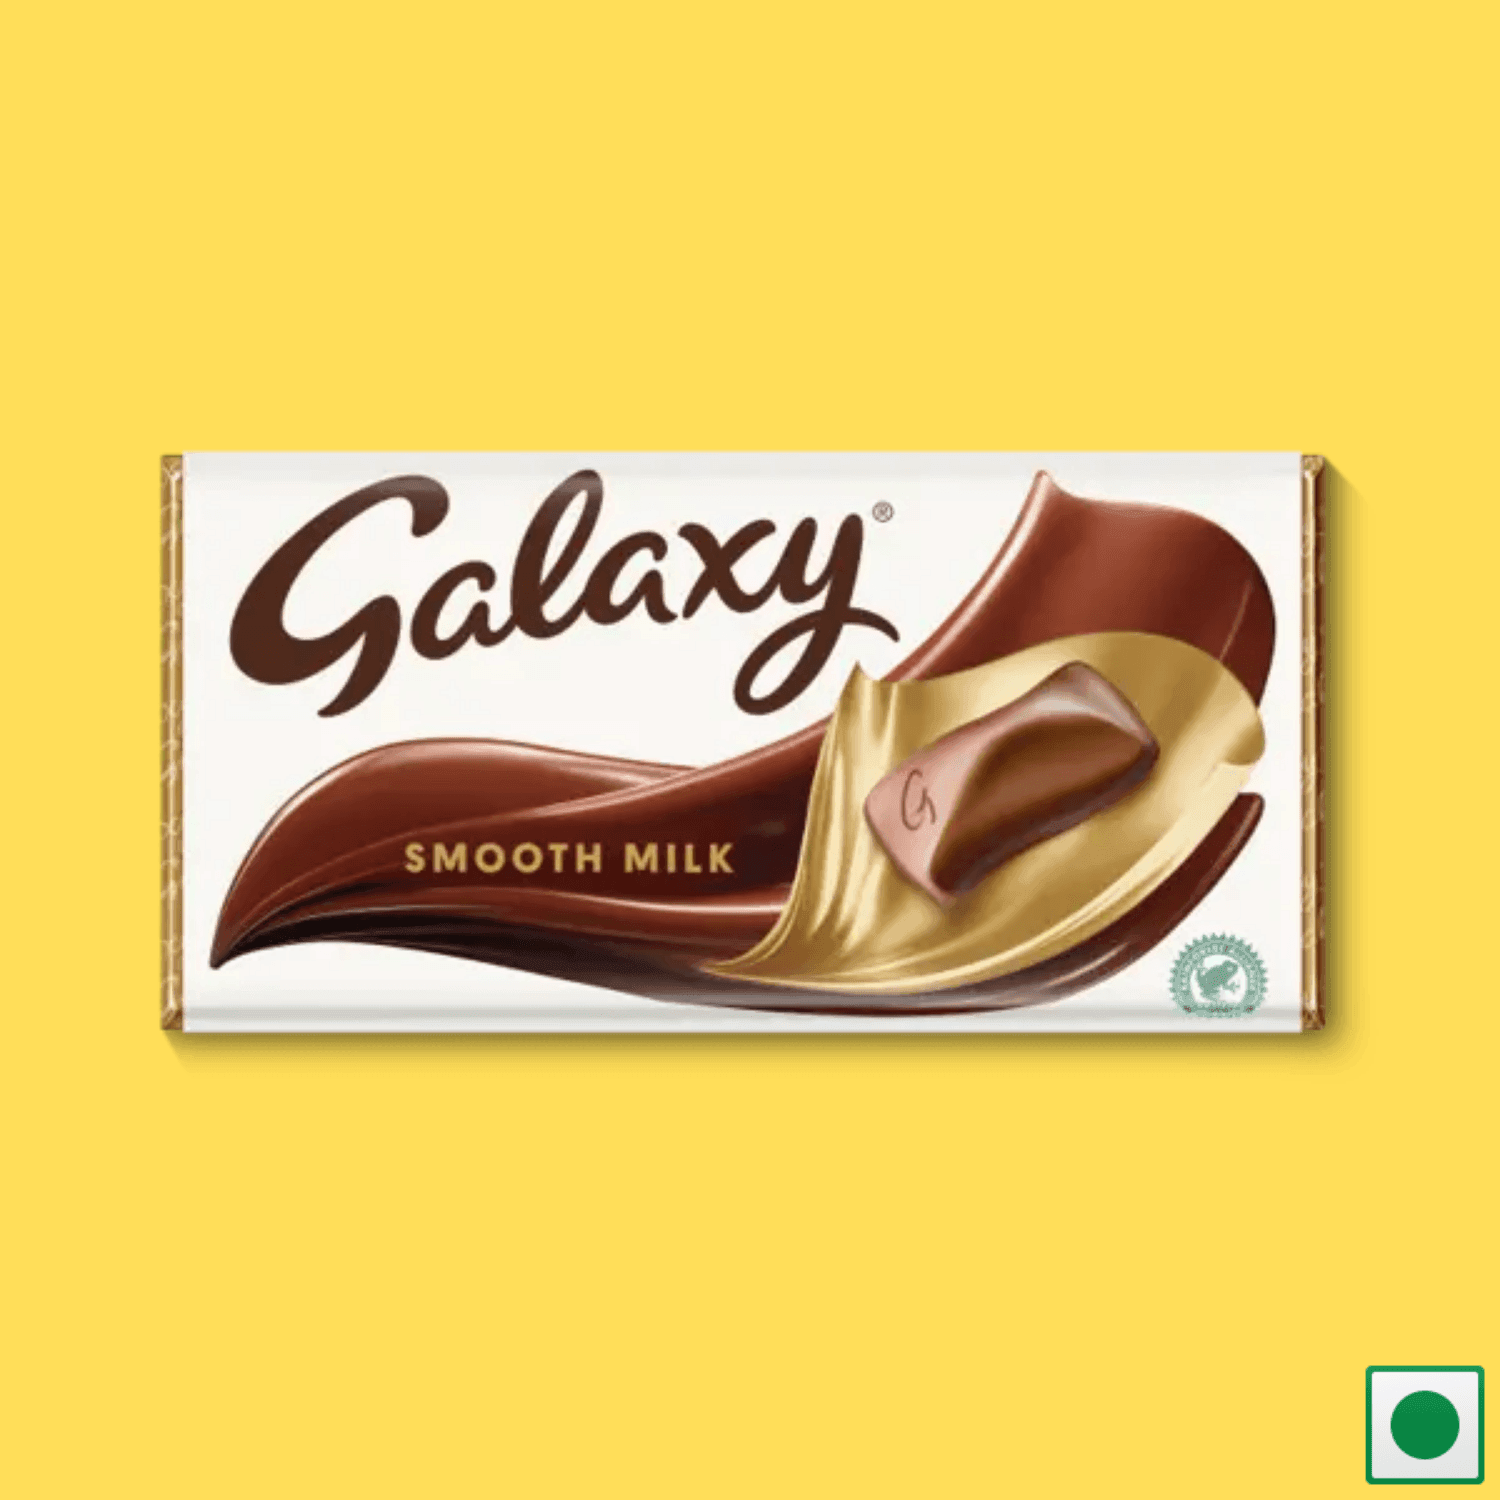 Galaxy® Smooth Milk Chocolate Block, 110g (Imported) - Super 7 Mart